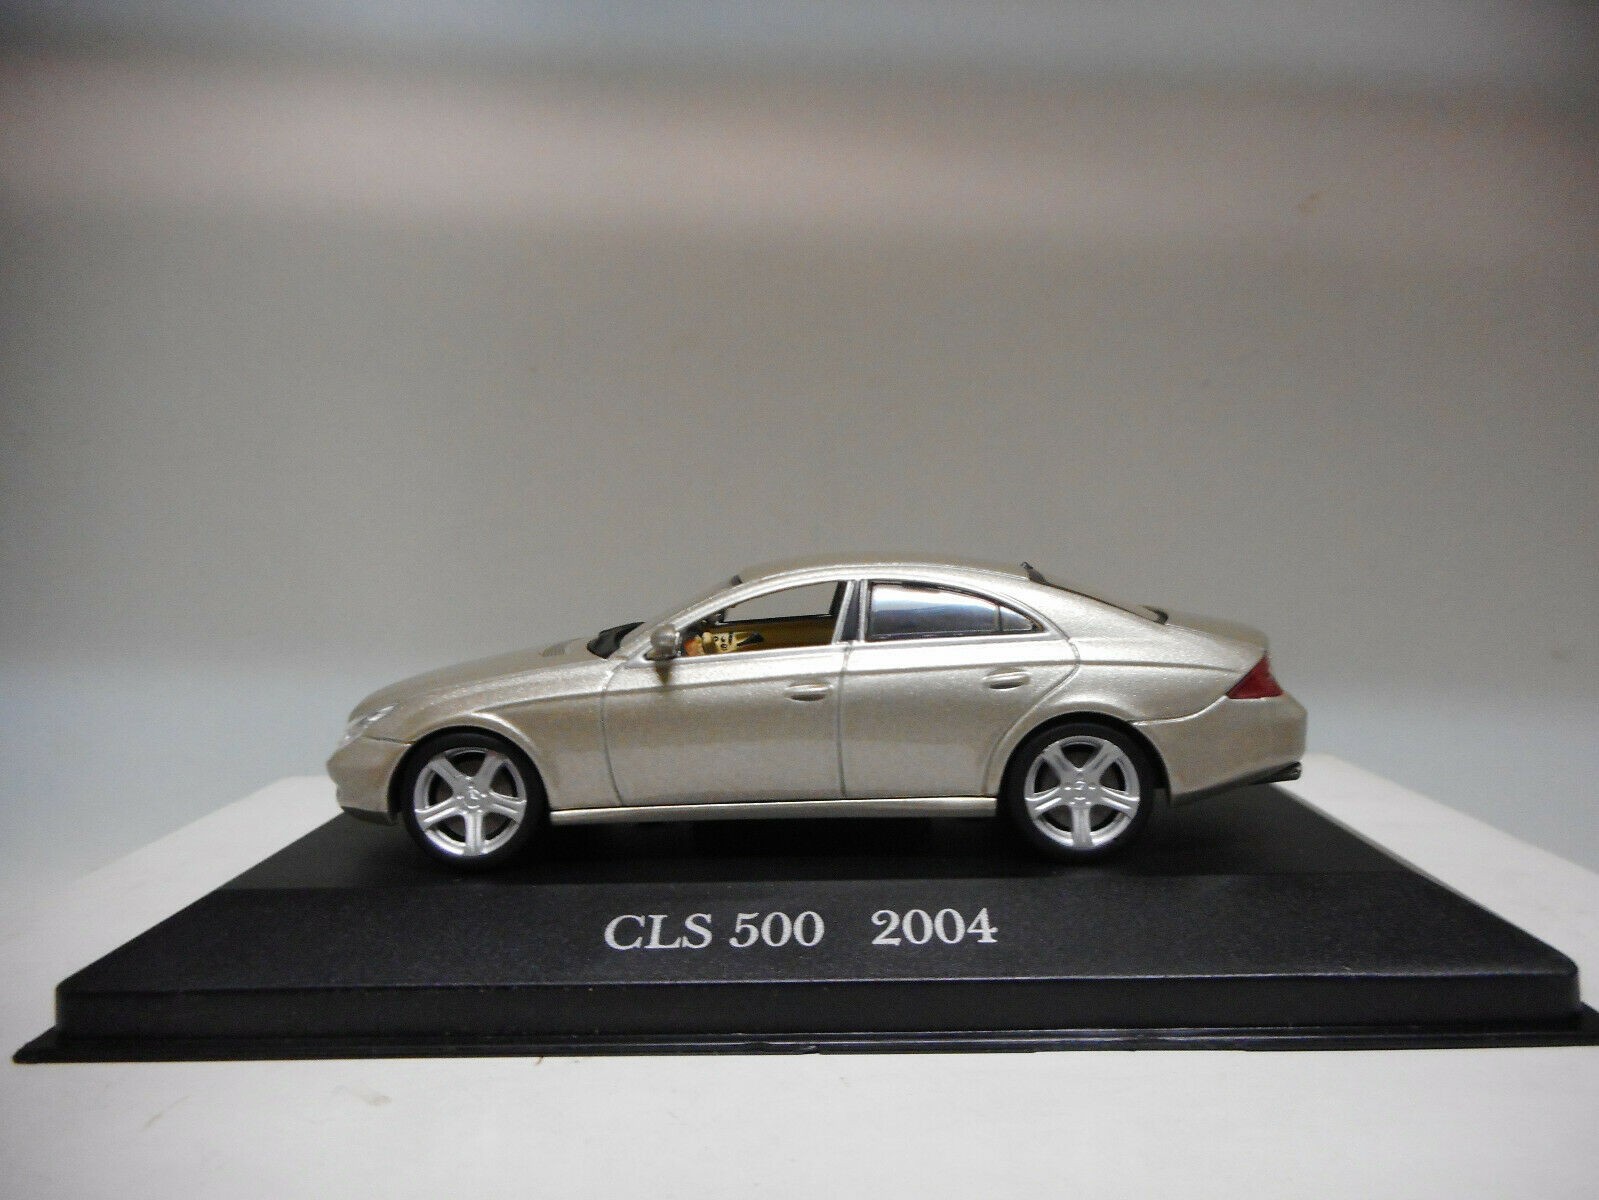 de agostini mercedes benz silver CLS 500 2004 car 1:43 scale diecast model 